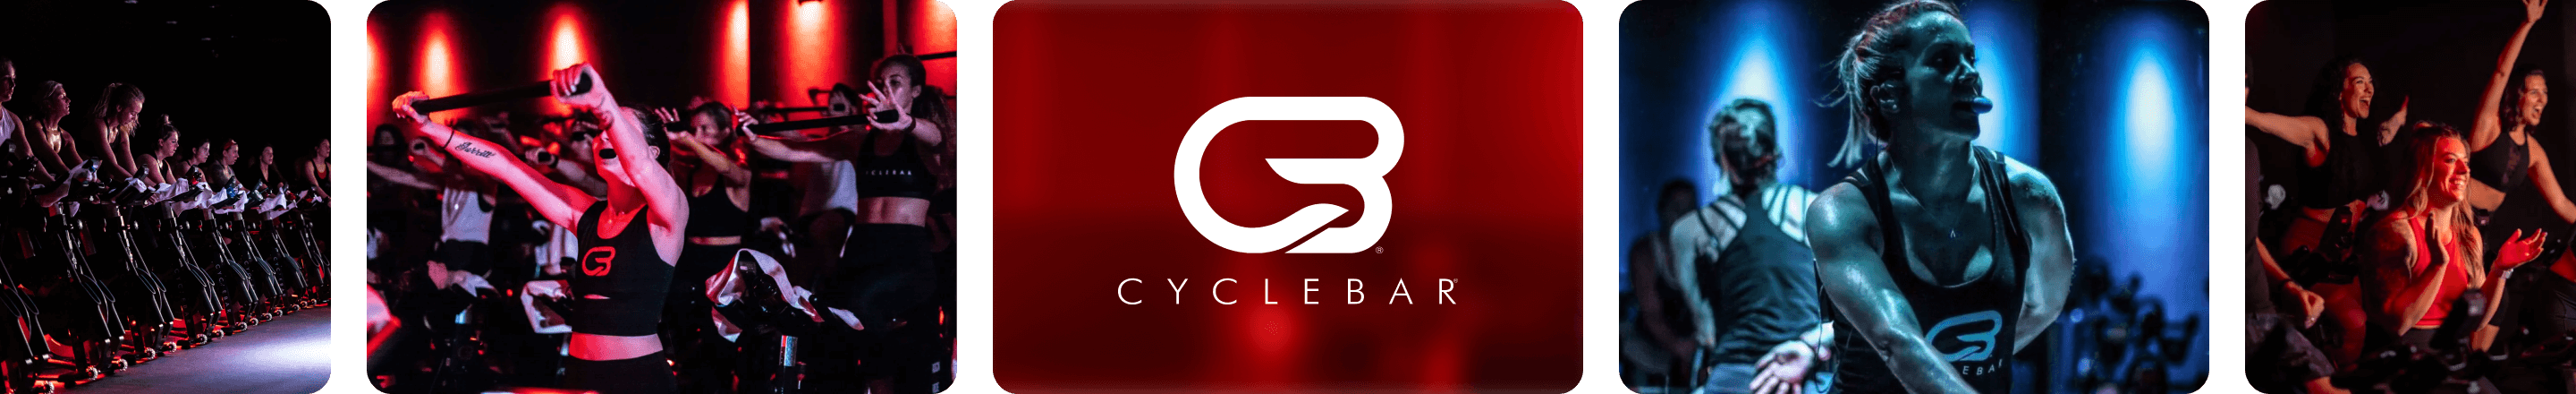 CycleBar-collage